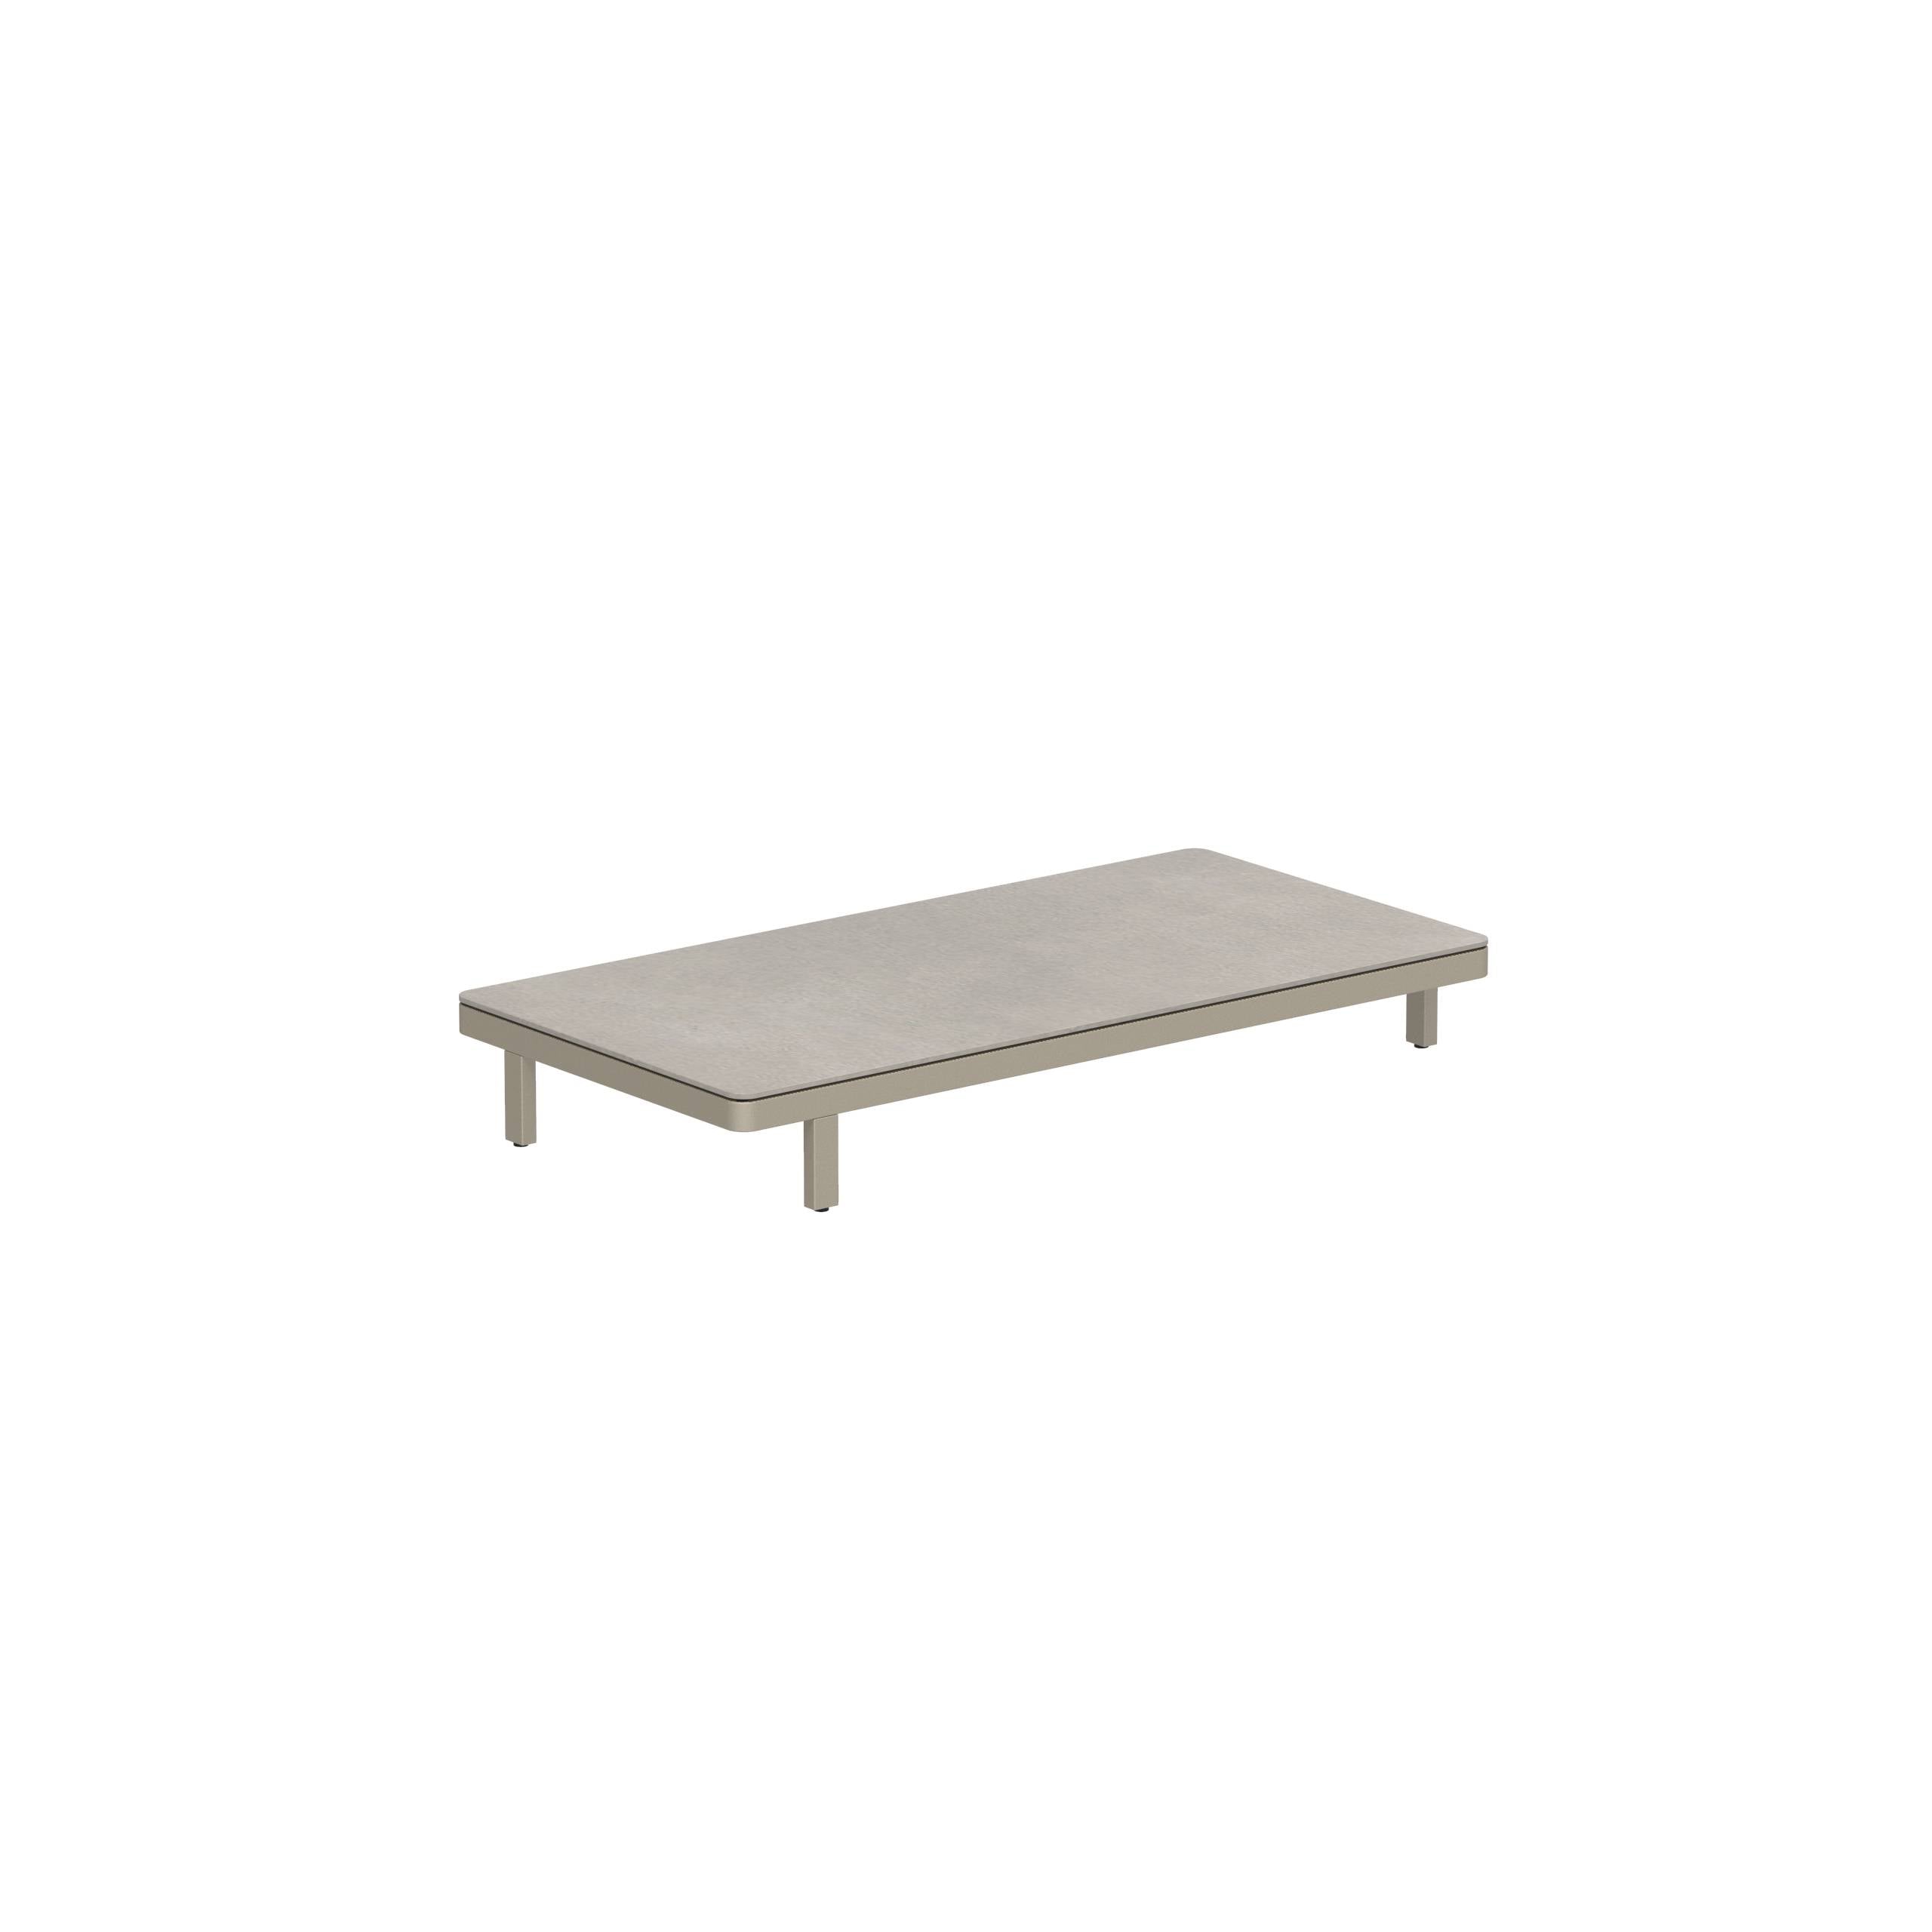 Alura Lounge 160 Ltl Table 160x80x23cm Sand Ceramic Tabletop Cemento Luminoso